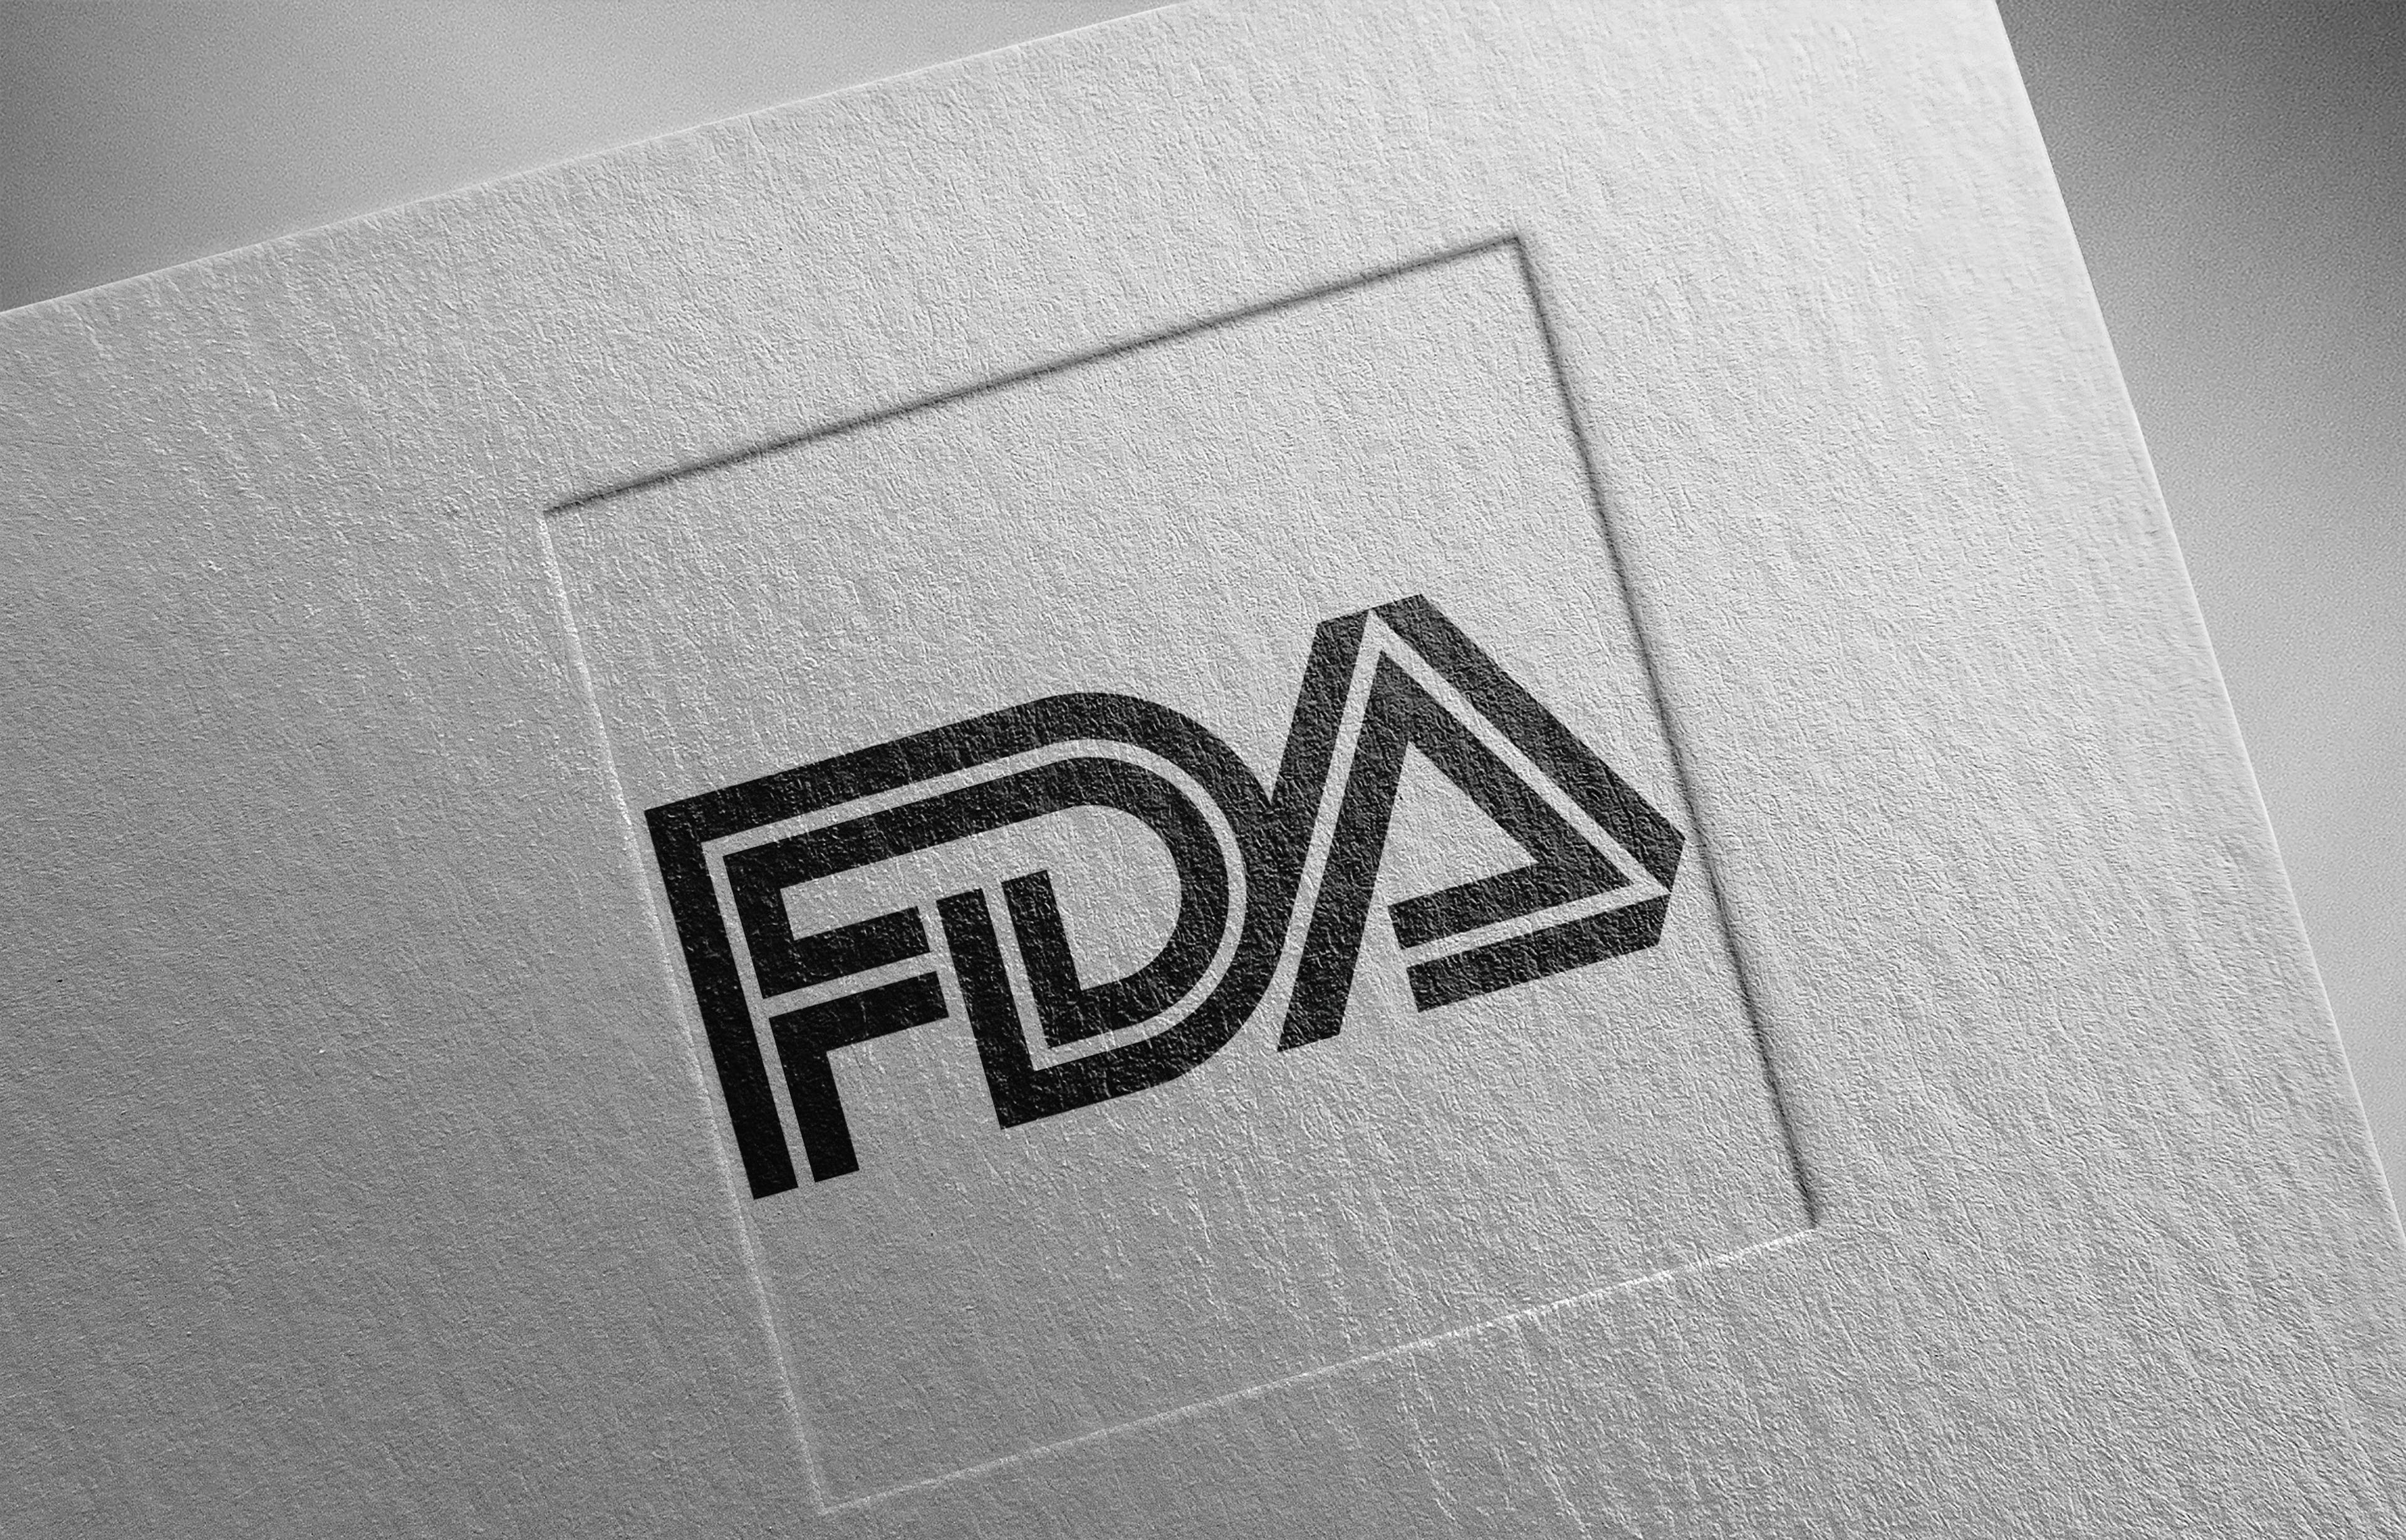 Aldeyra Therapeutics: FDA accepts NDA for dry eye treatment